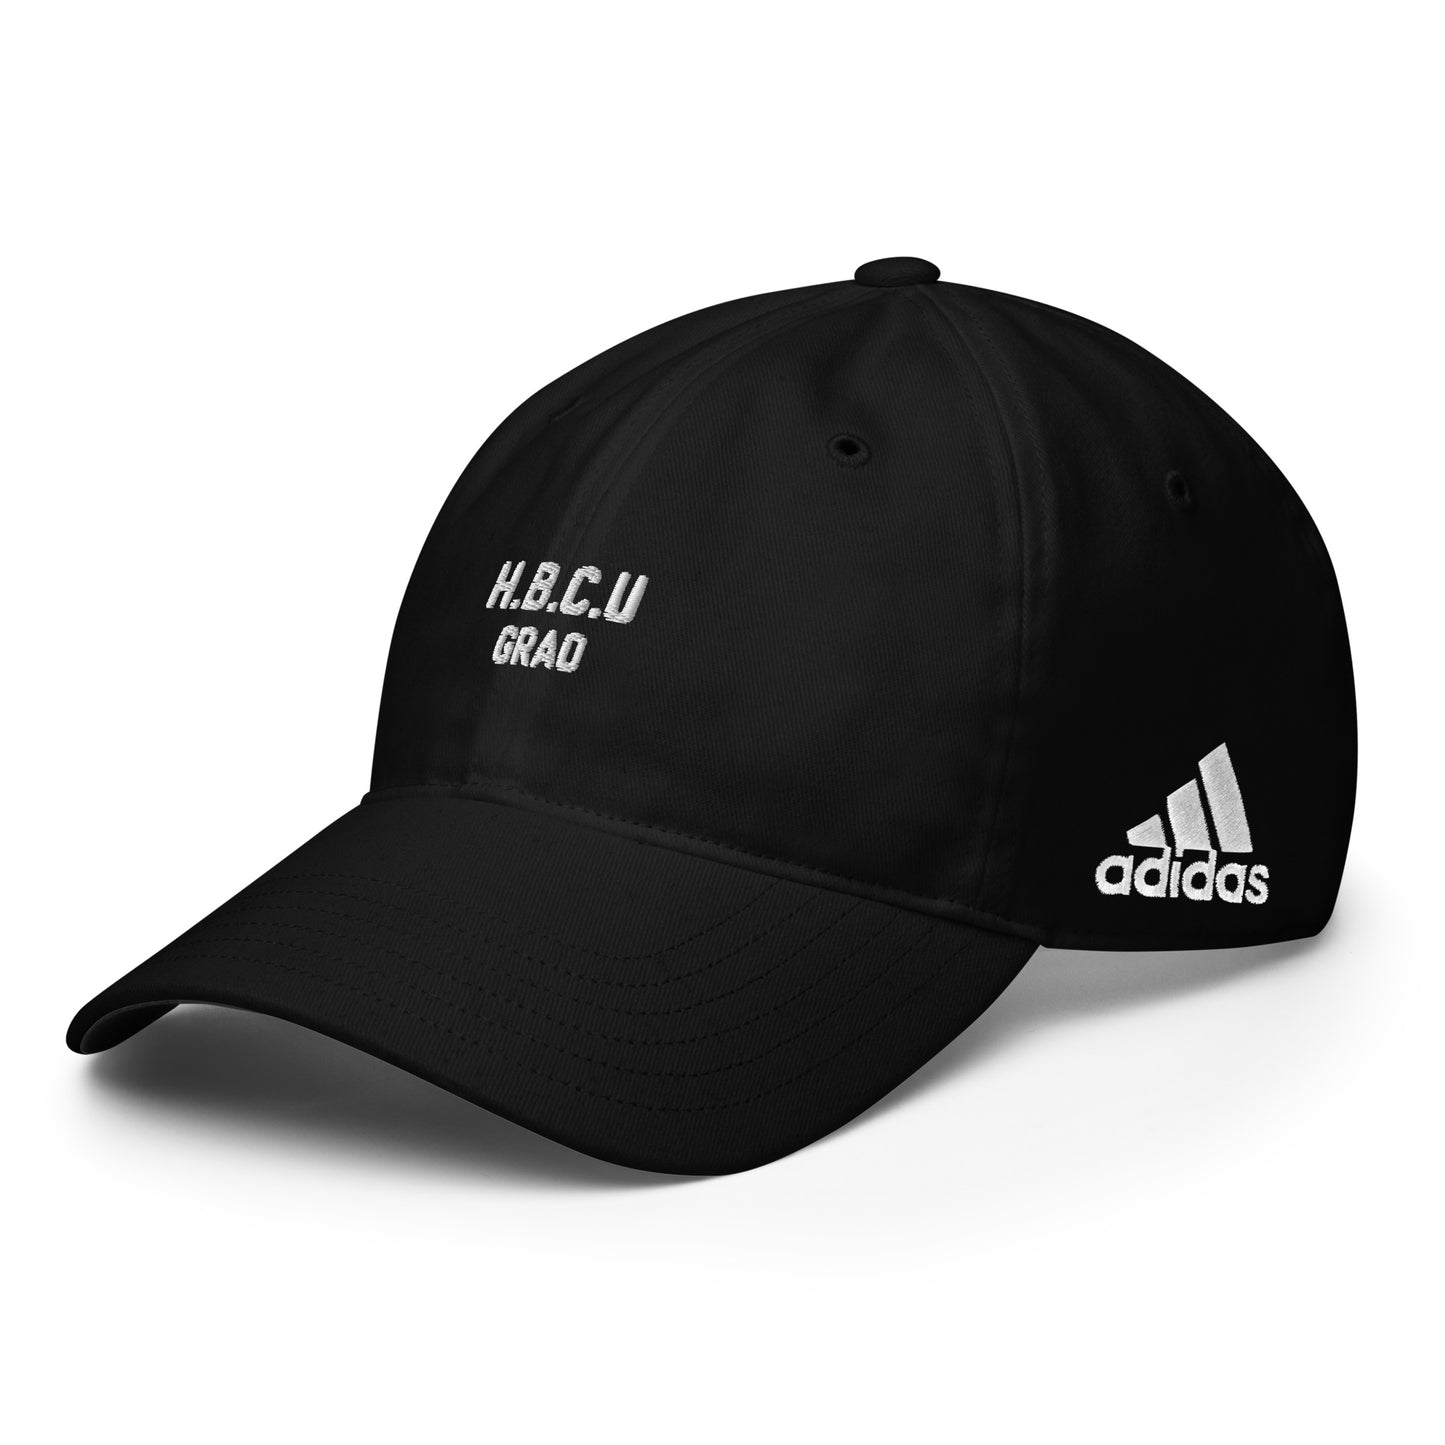 HBCU x Adidas - Performance Golf Cap